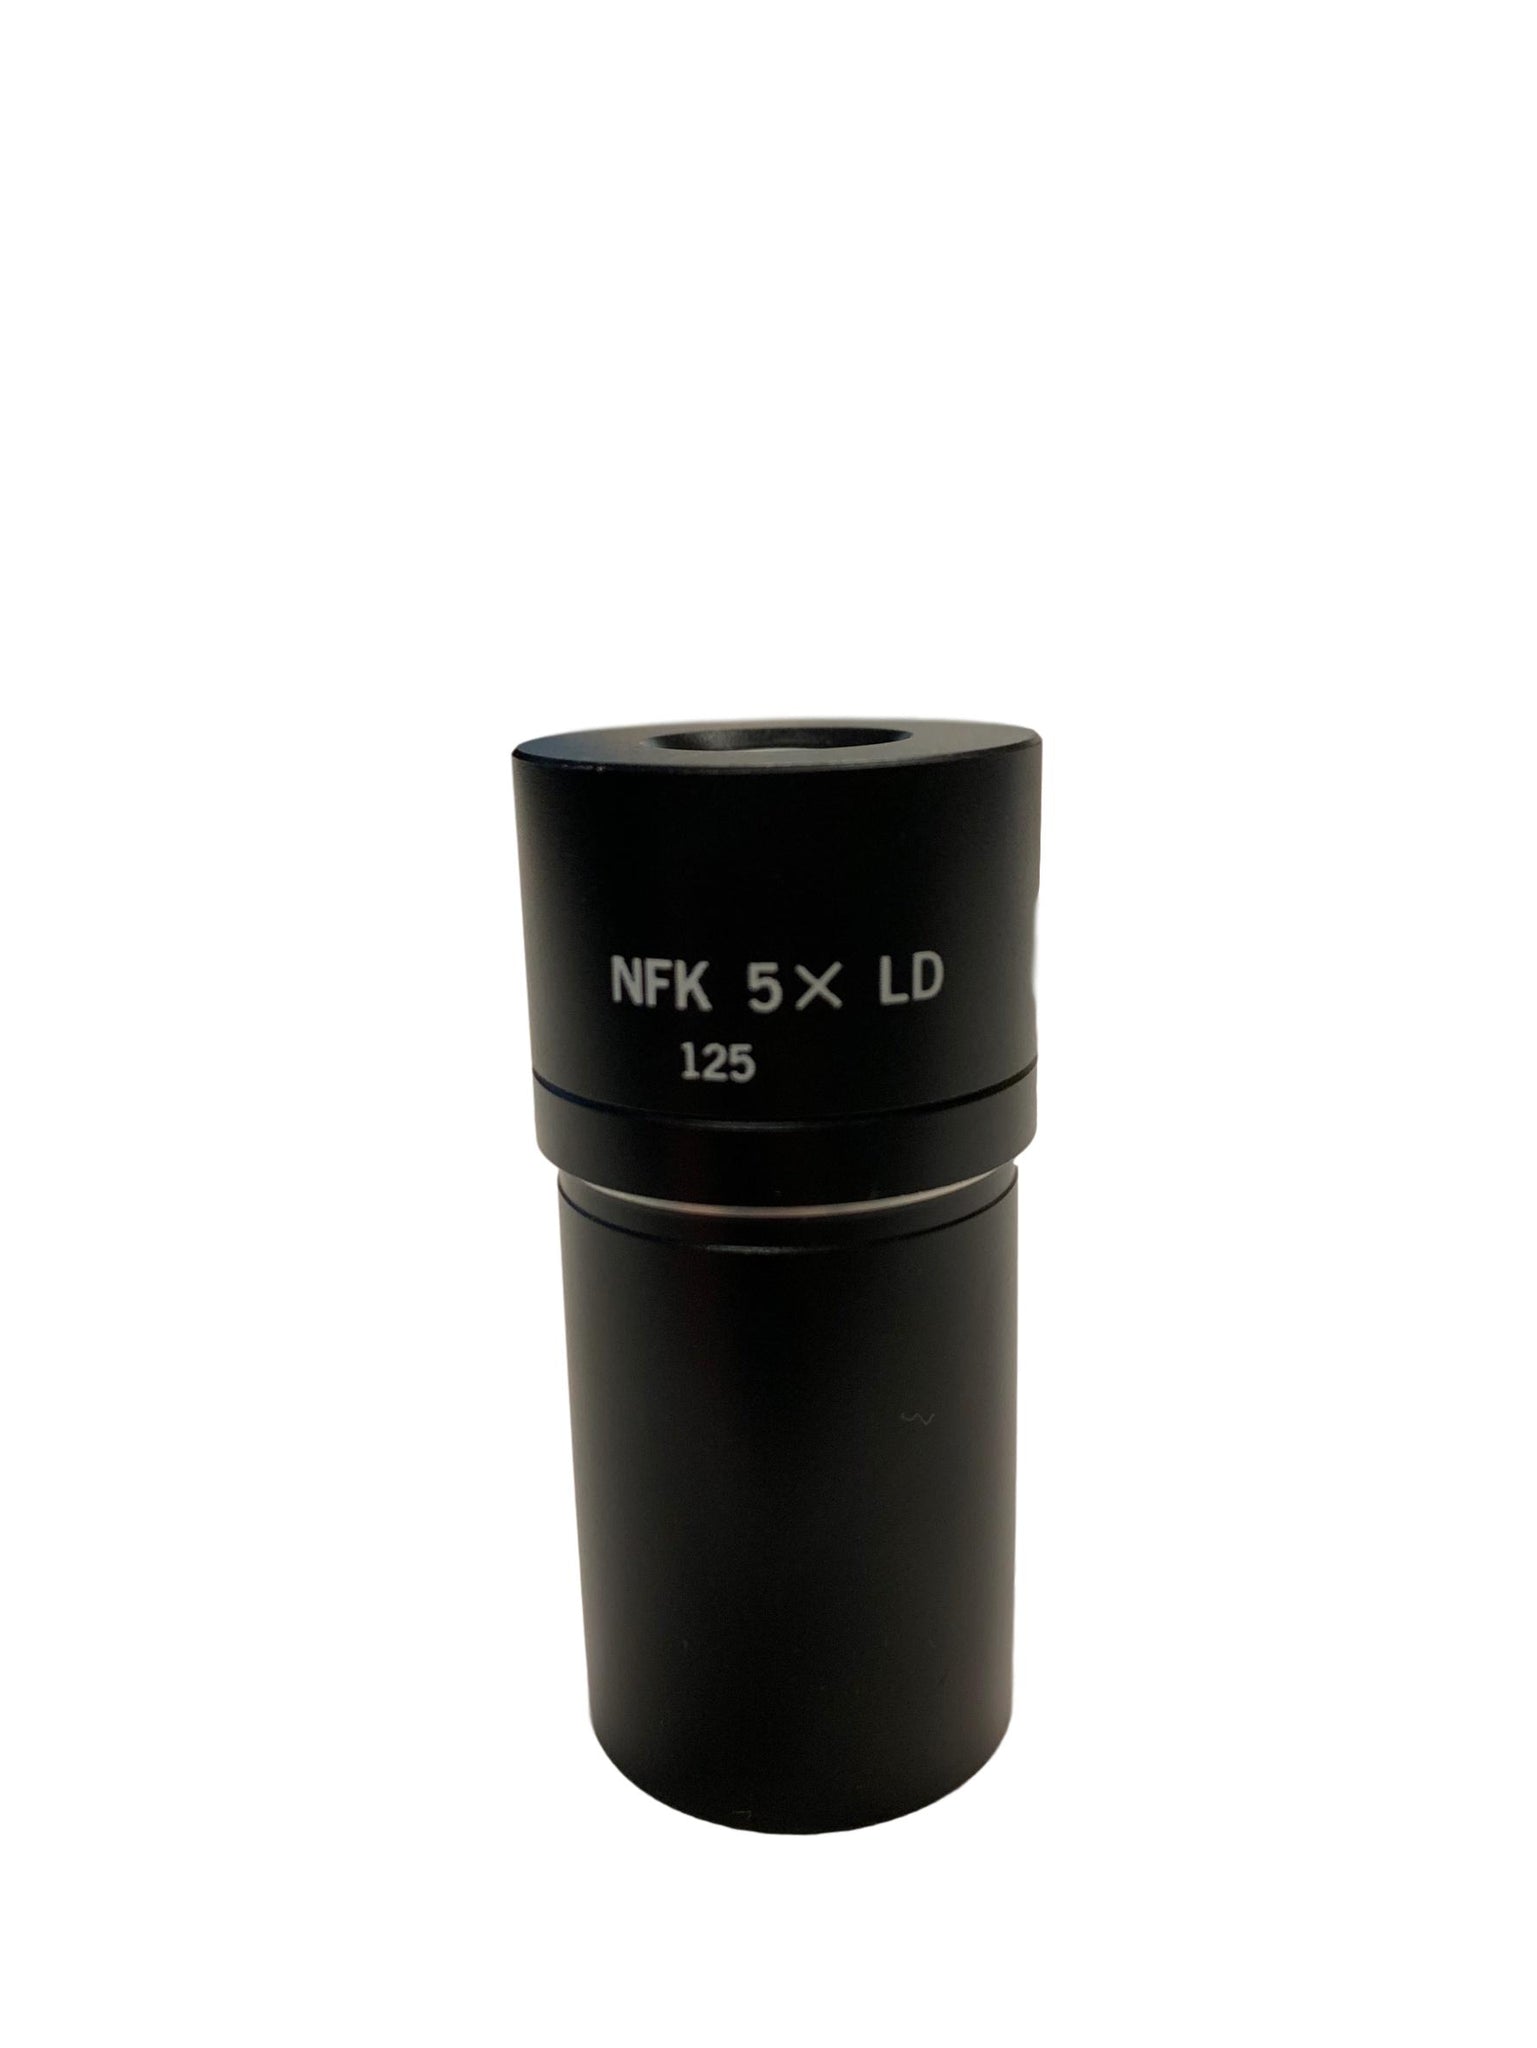 Olympus NFK 5x LD 125 Microscope Photo Eyepiece